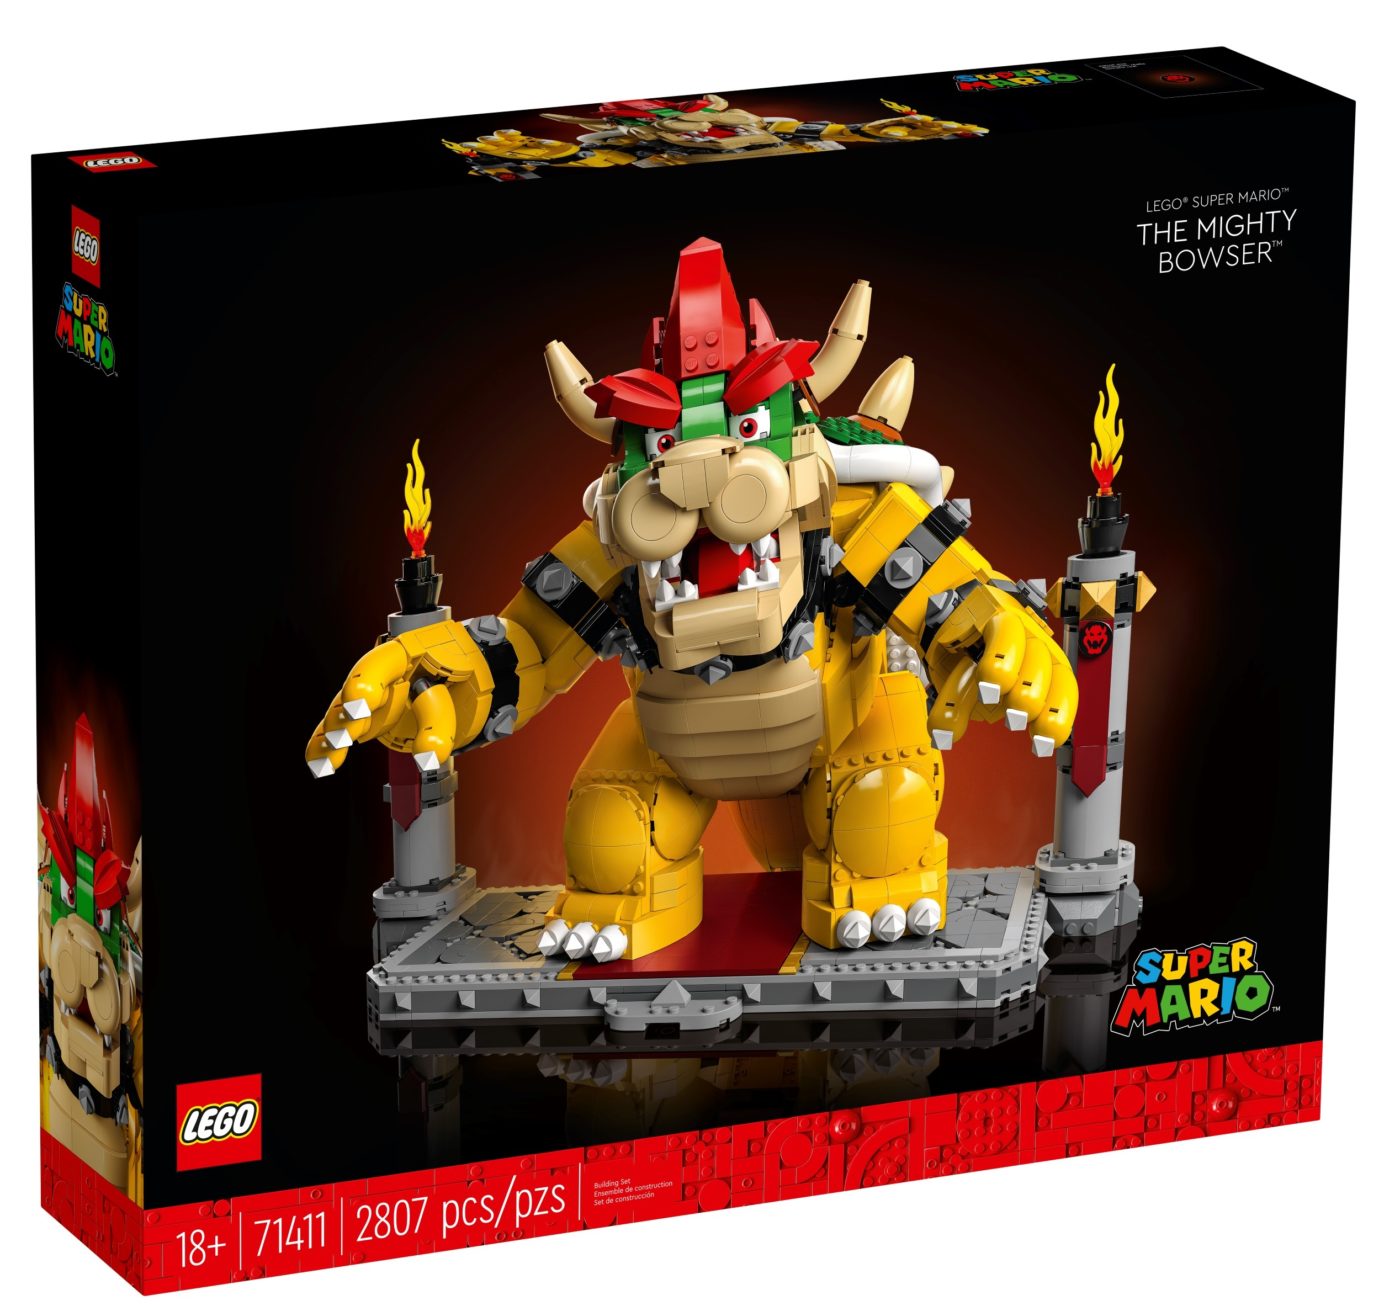 2,807-piece LEGO 71411 The Mighty Bowser revealed! - Jay's Brick Blog